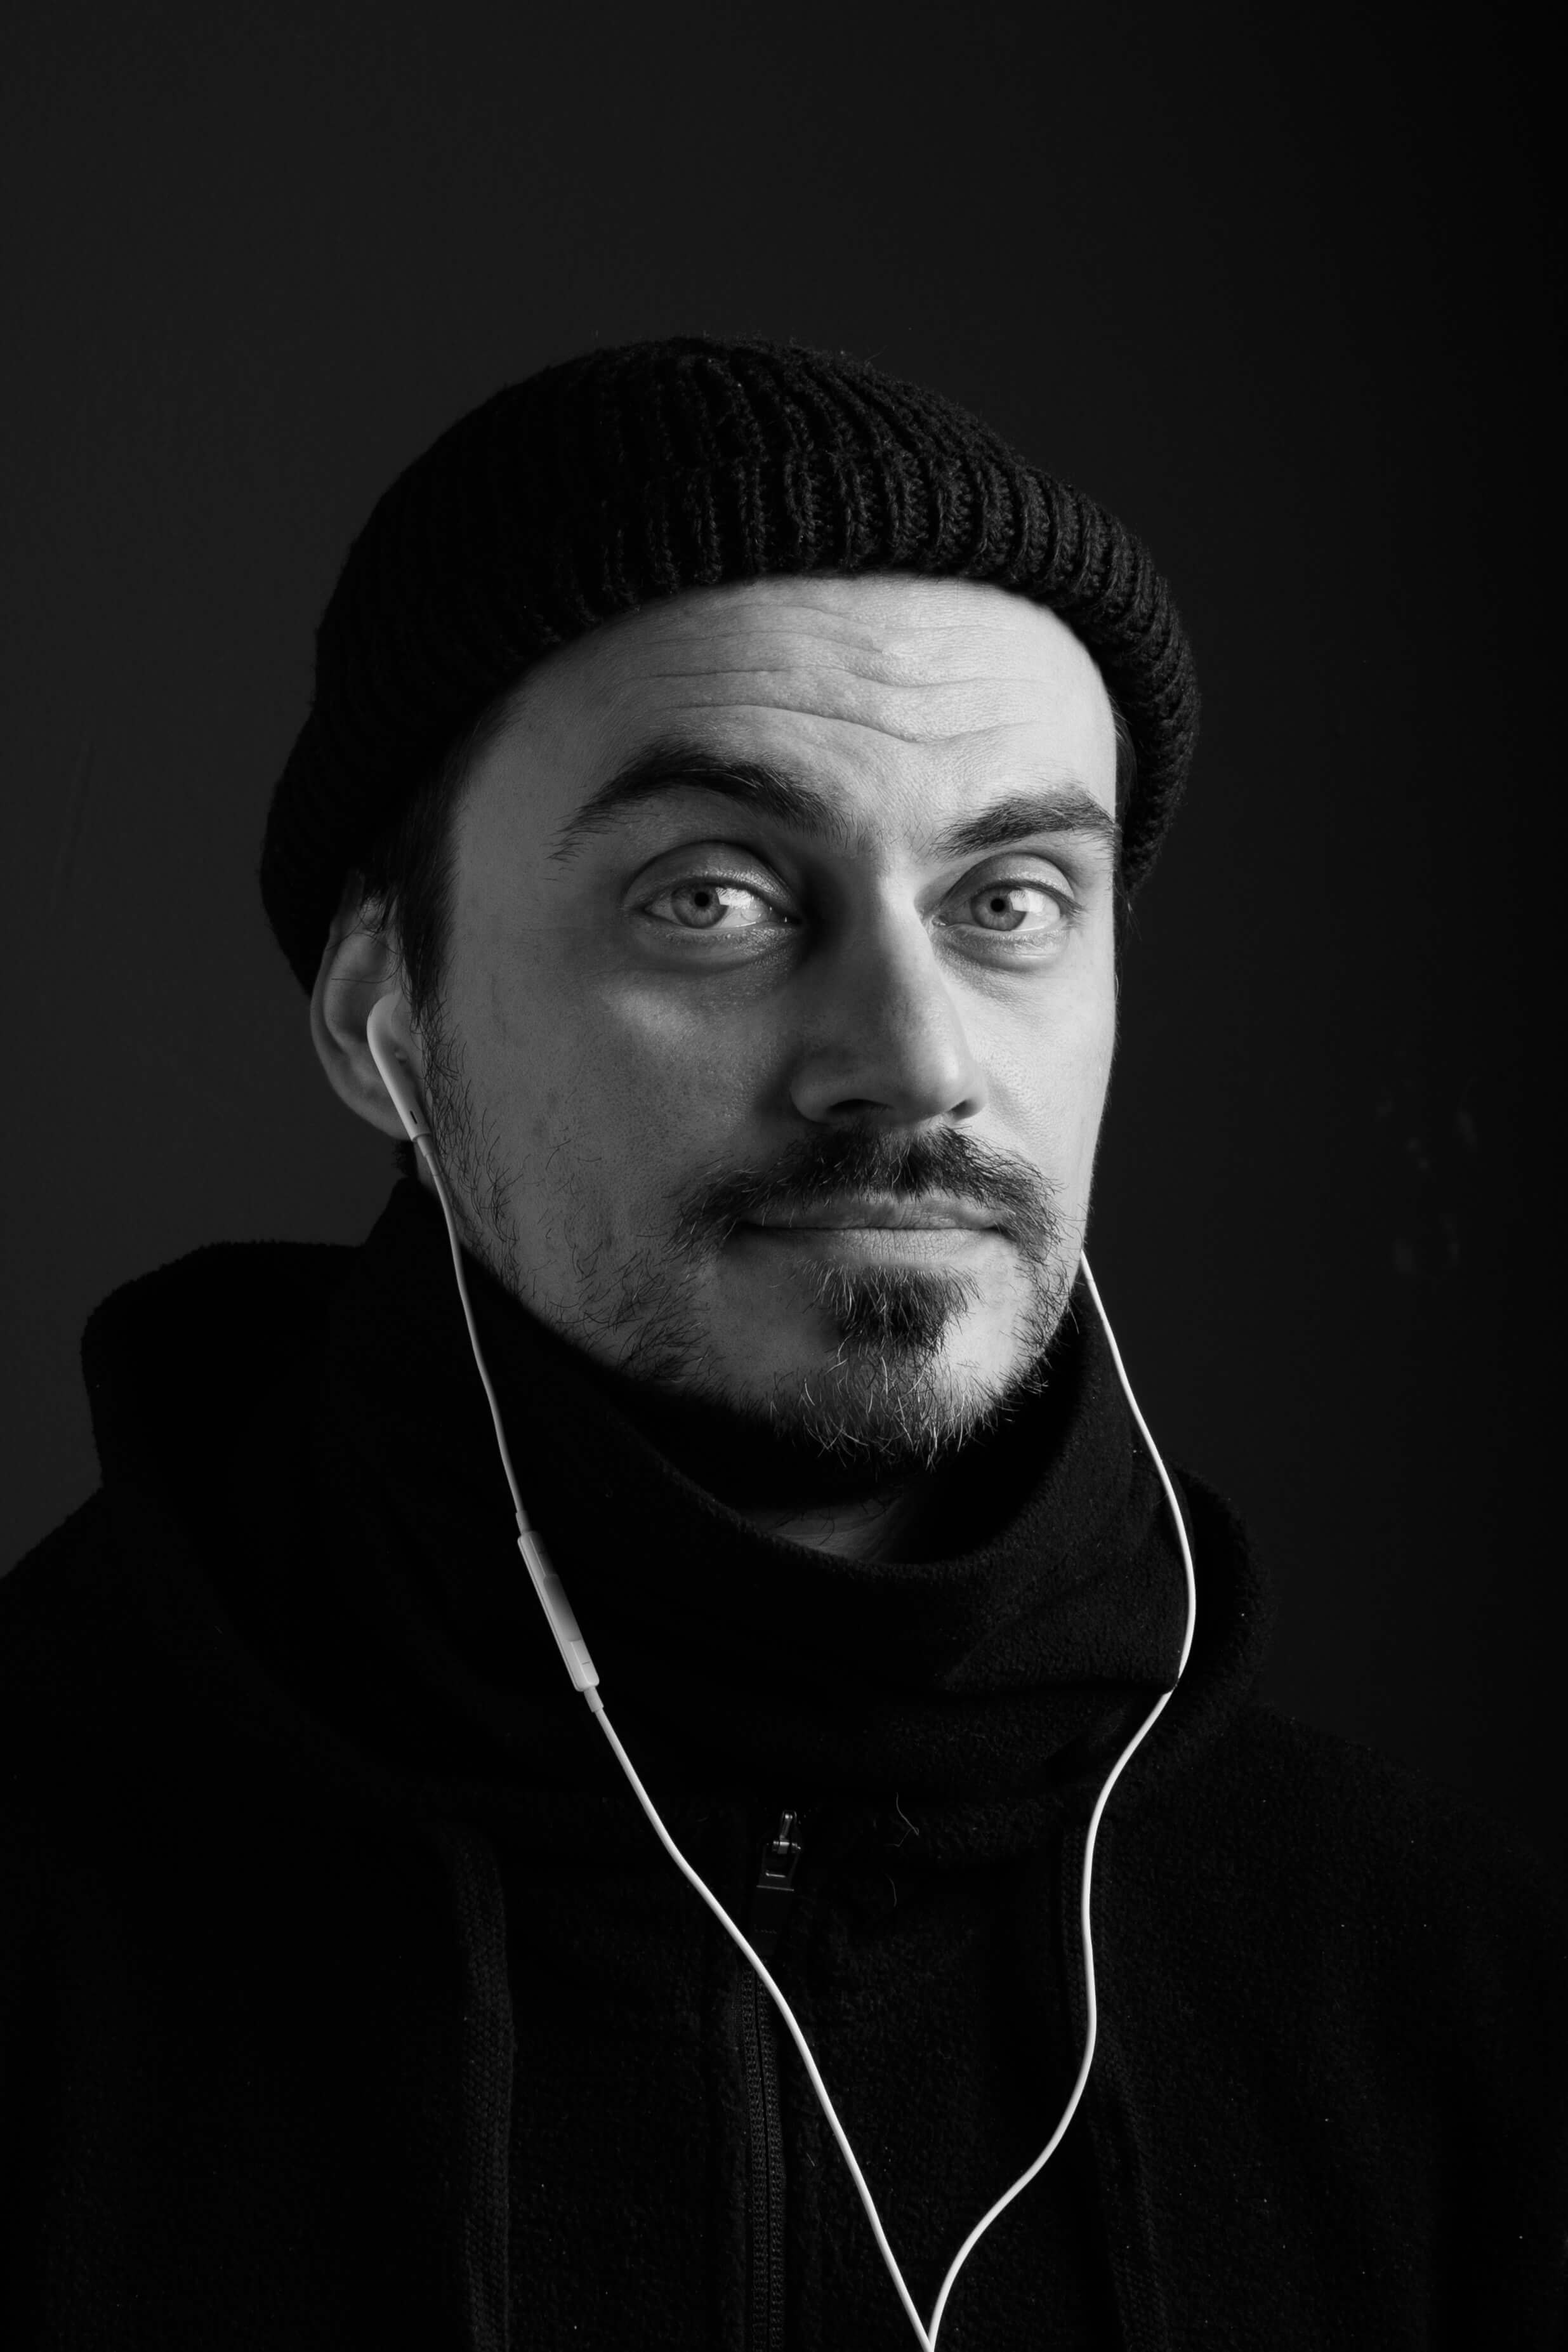 Dimitar Inchev looking surprised wearing a black winter hat and headphones.